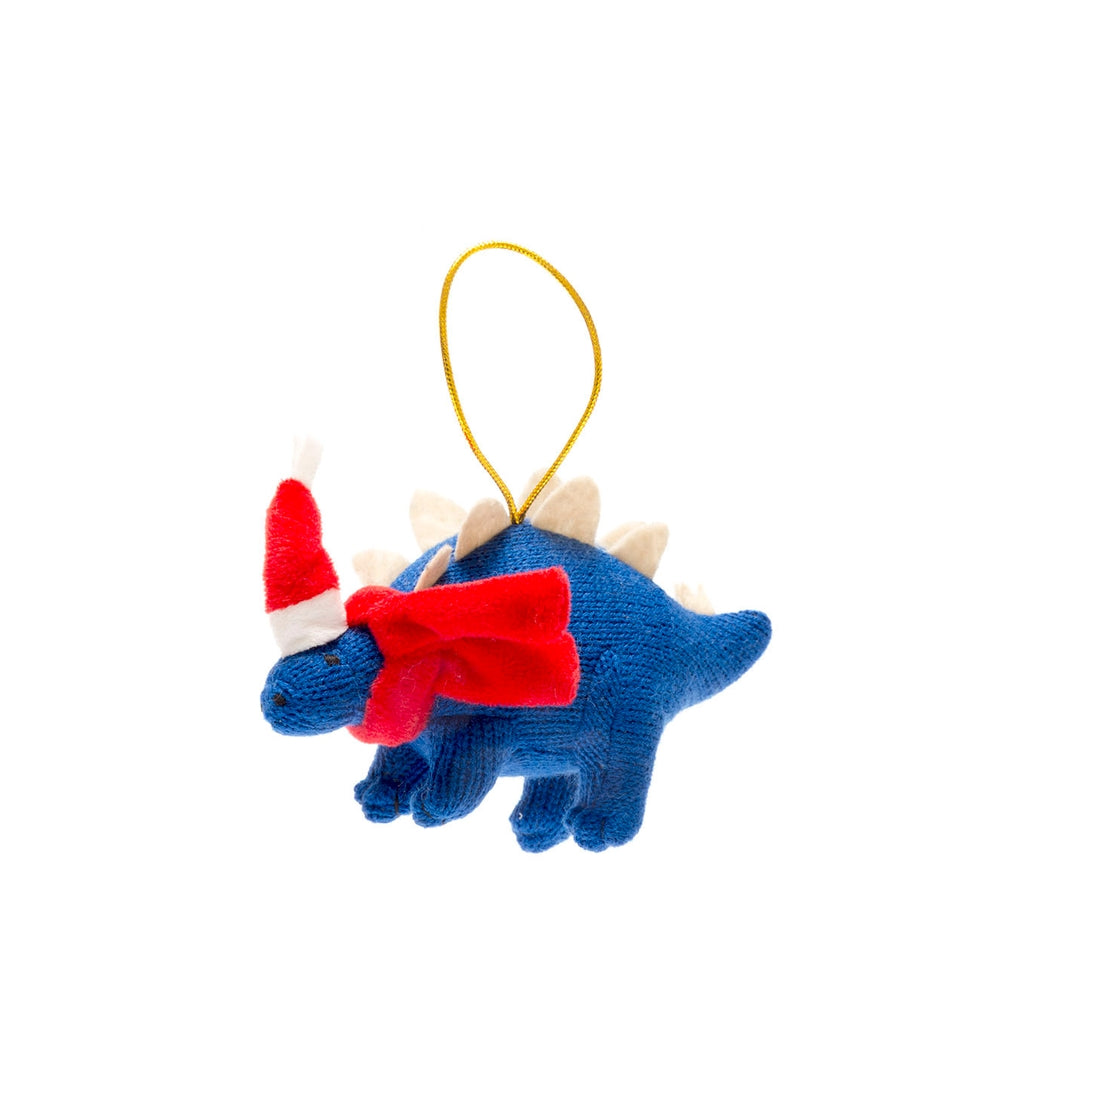 Knitted Stegosaurus Ornament